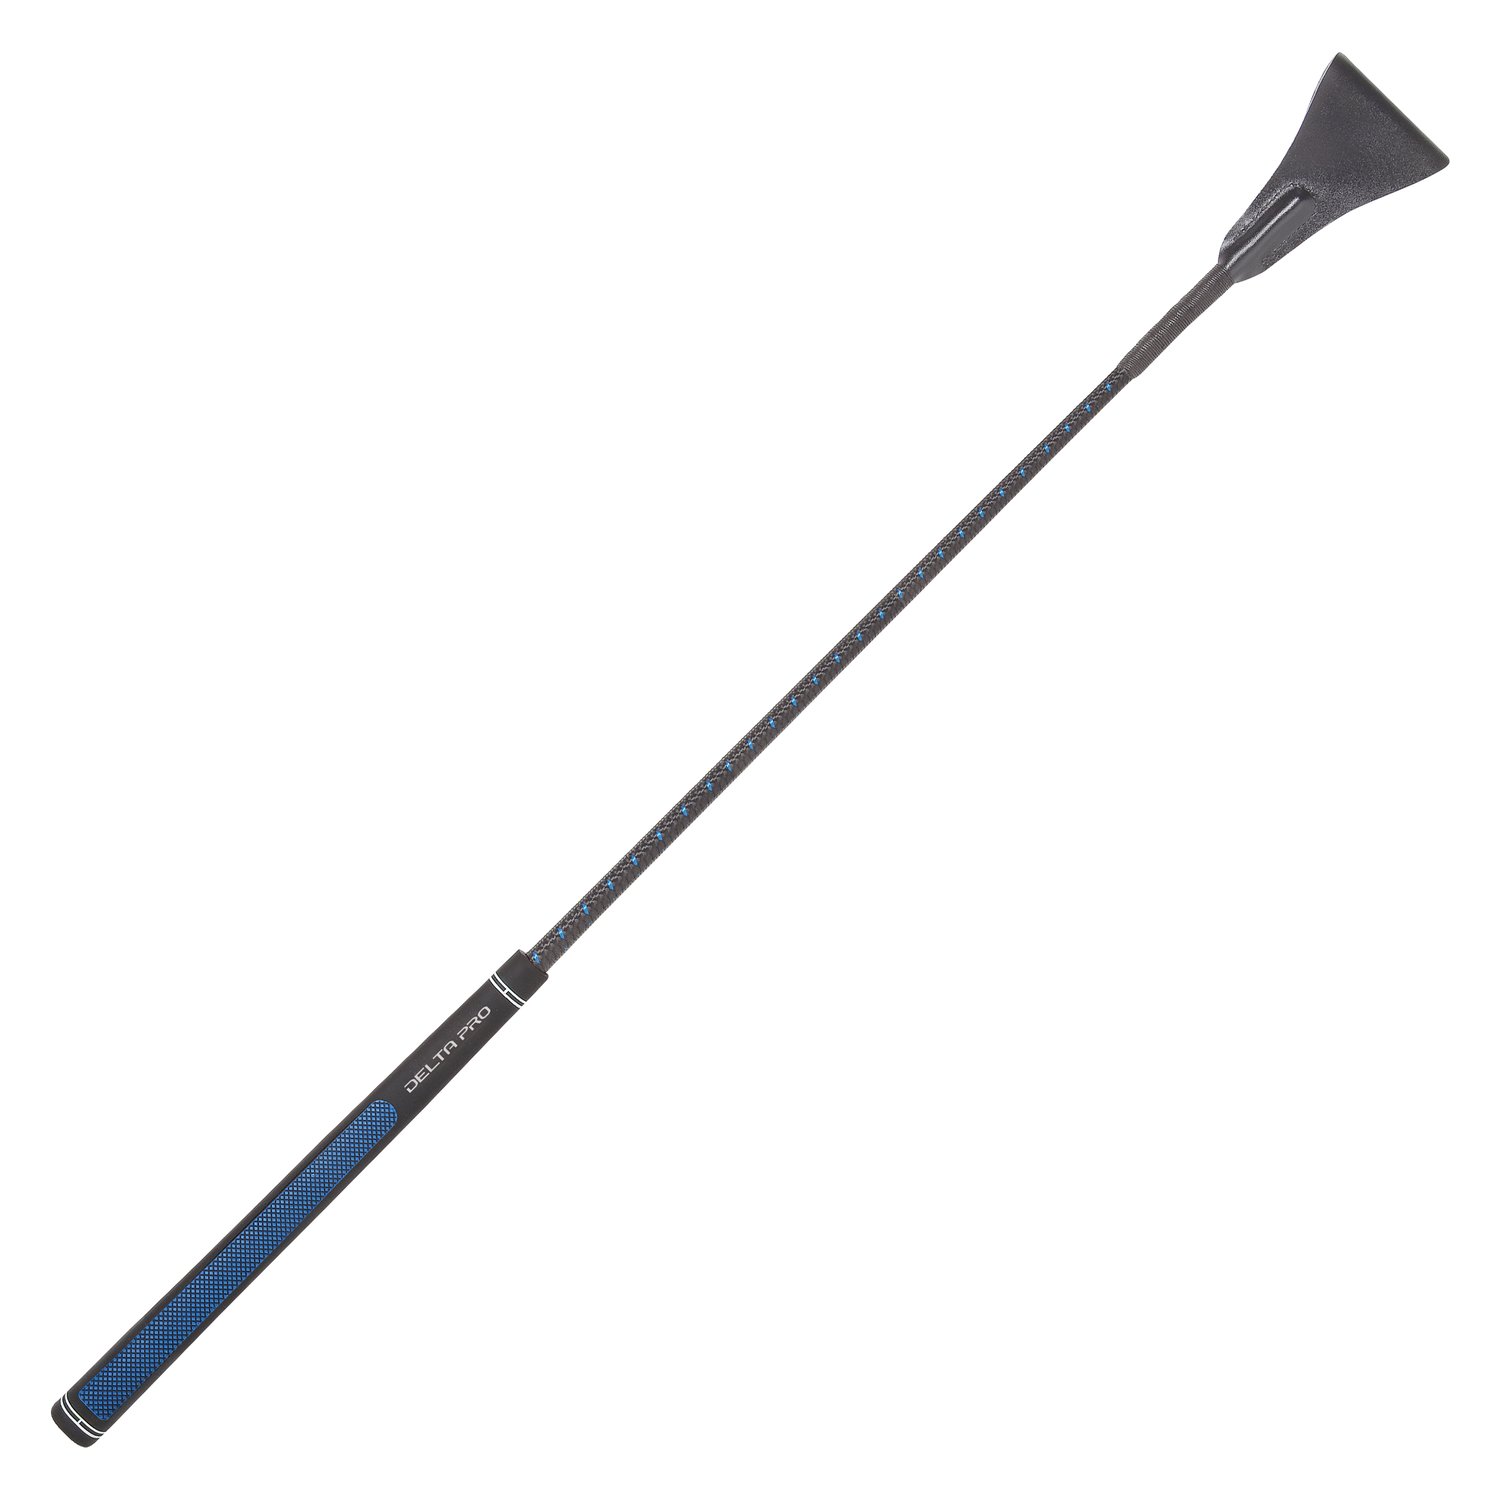 FLECK Springstock Delta Pro Griff Nylongespinst - schwarz-blau - 50 cm - 2